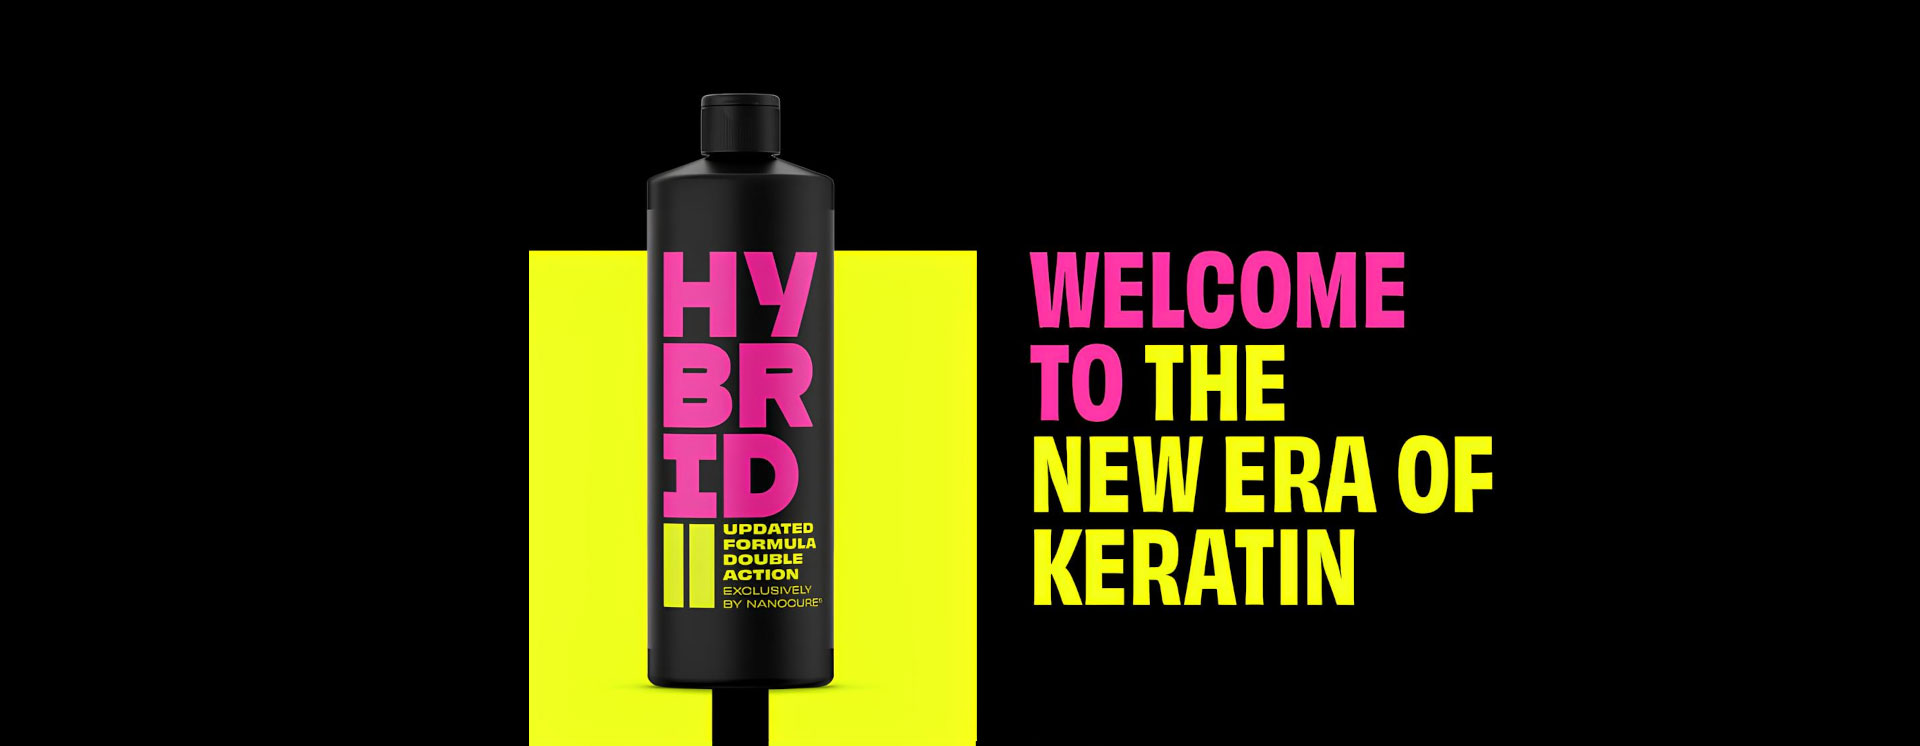 Keratin Nanocure® Hybrid 2: Νέα φόρμουλα υβριδικής ισιωτικής με κερατίνη από την Angelopoulos Hair!